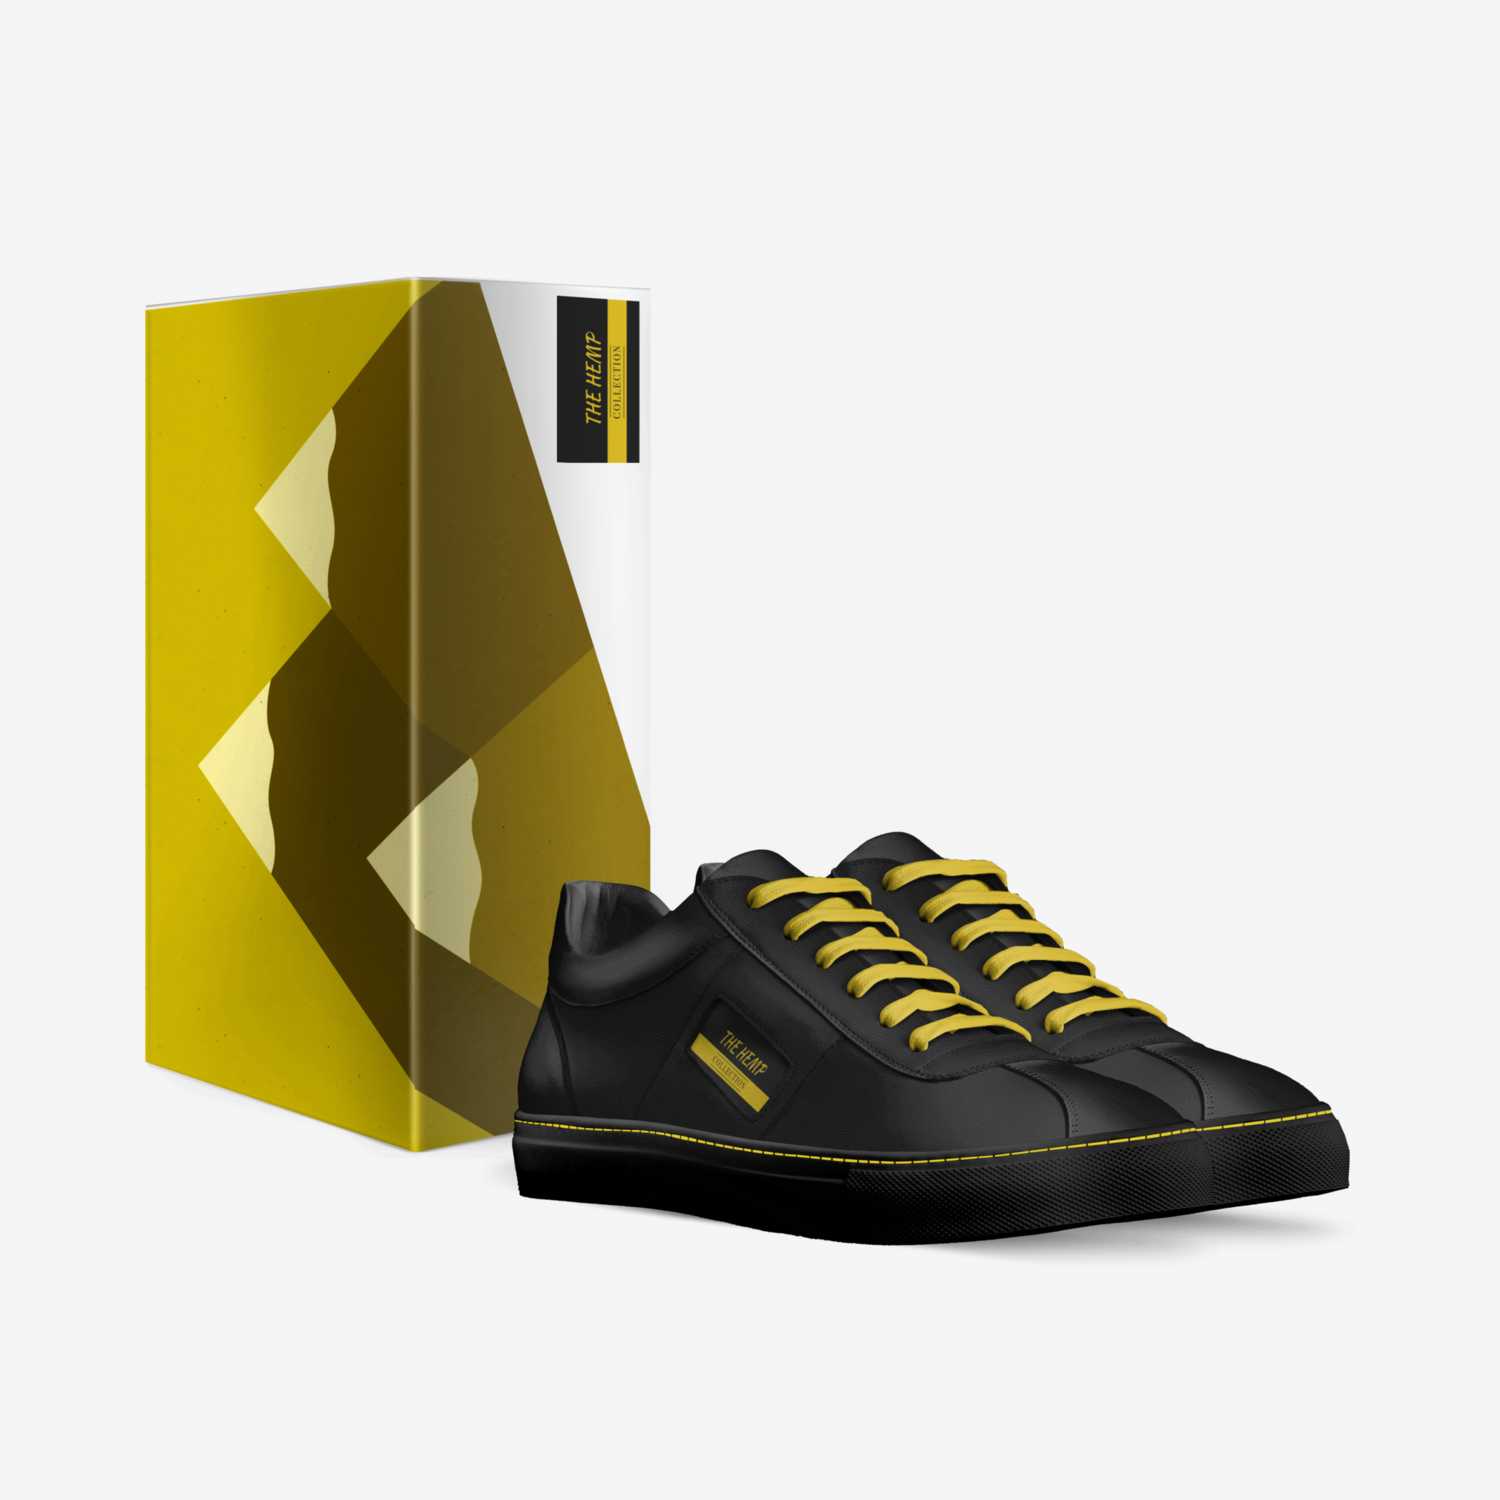 THE HEMP custom made in Italy shoes by Daniel W Hemphill Sr | Box view